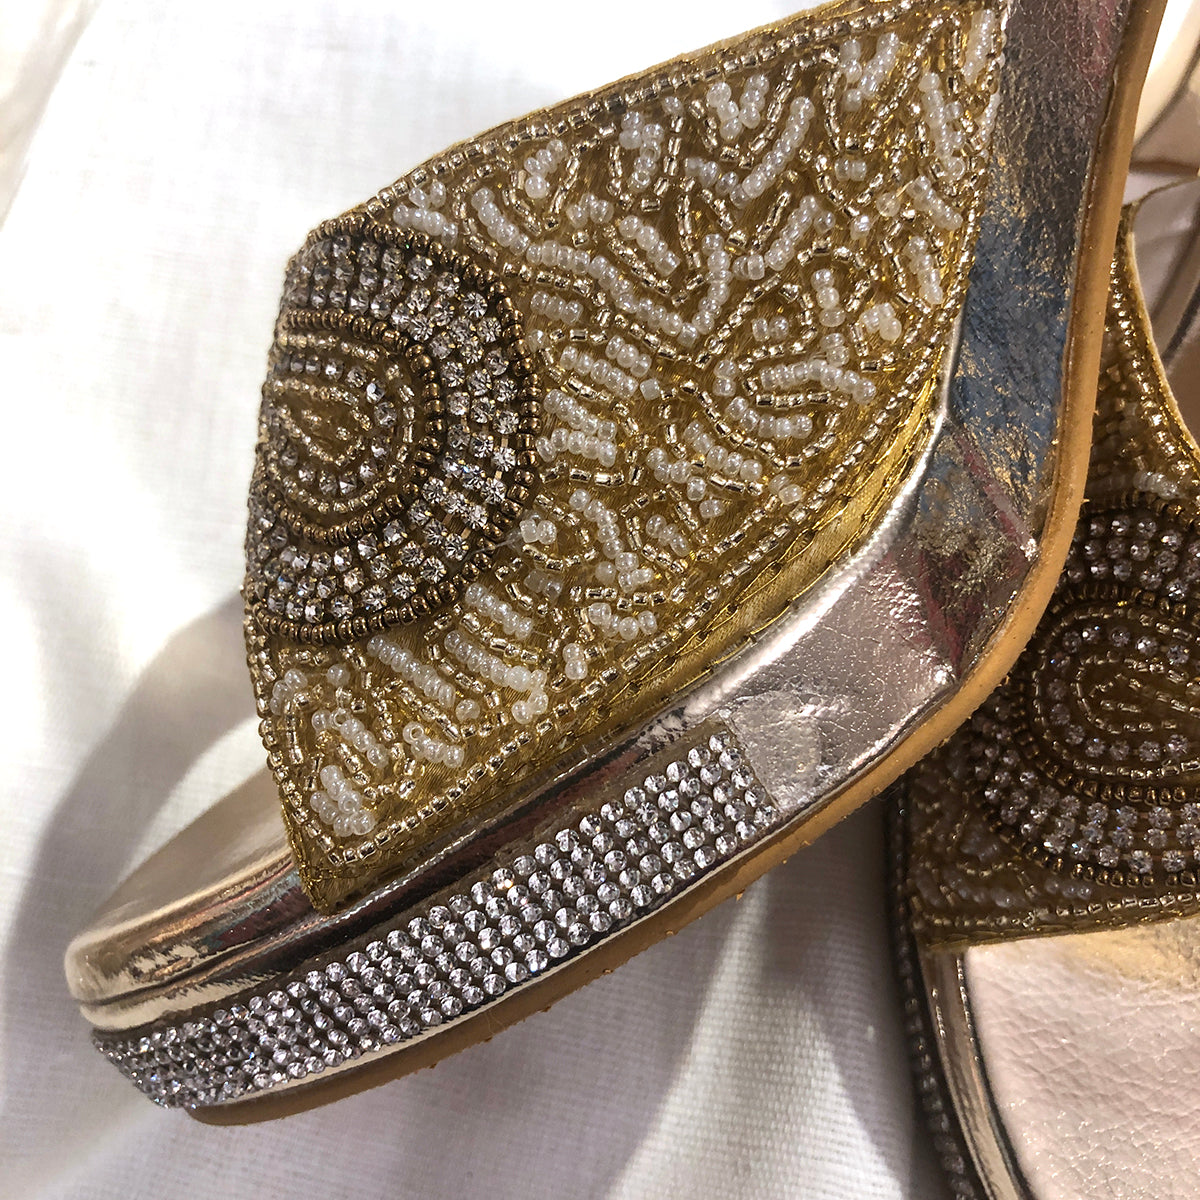 DT Gold Sandals 2 - Vintage India NYC